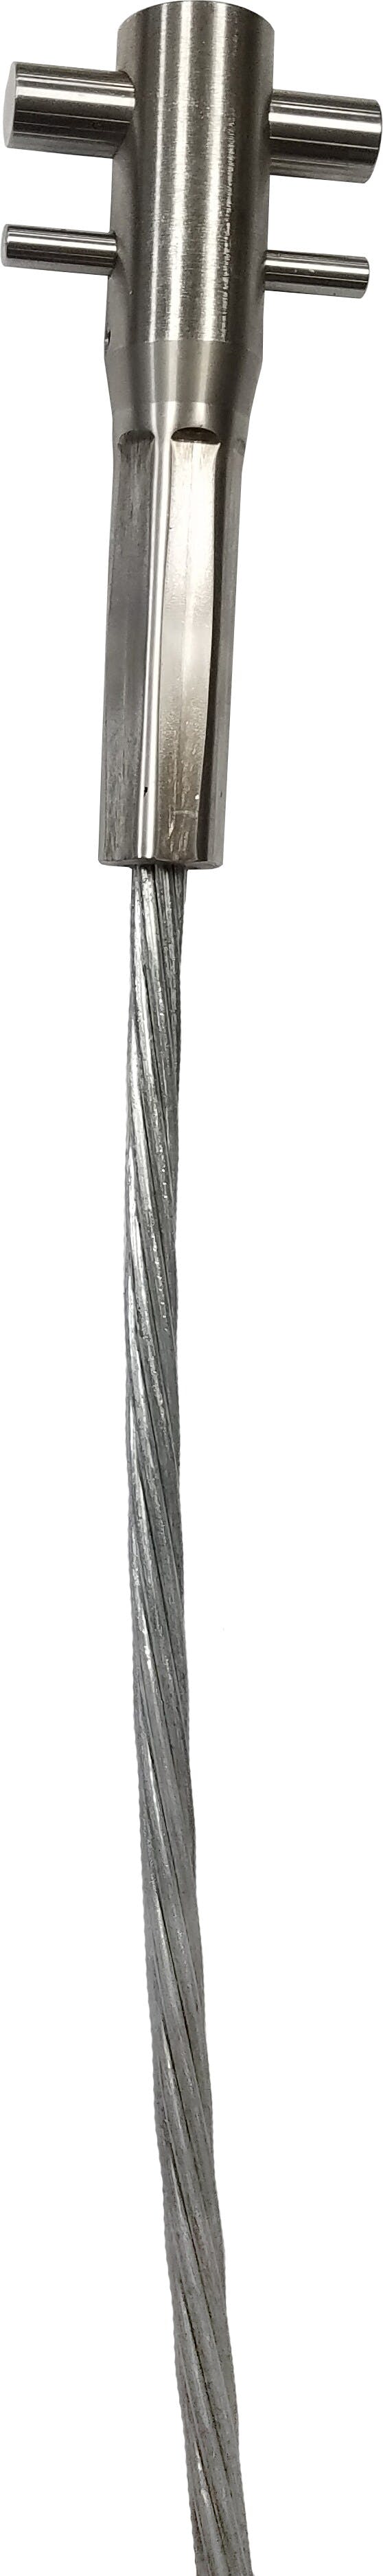 3M™ DBI-SALA® Lad-Saf™ Swaged Cable 6115025, 3/8 Inch, Galvanized Steel, 90 m_0